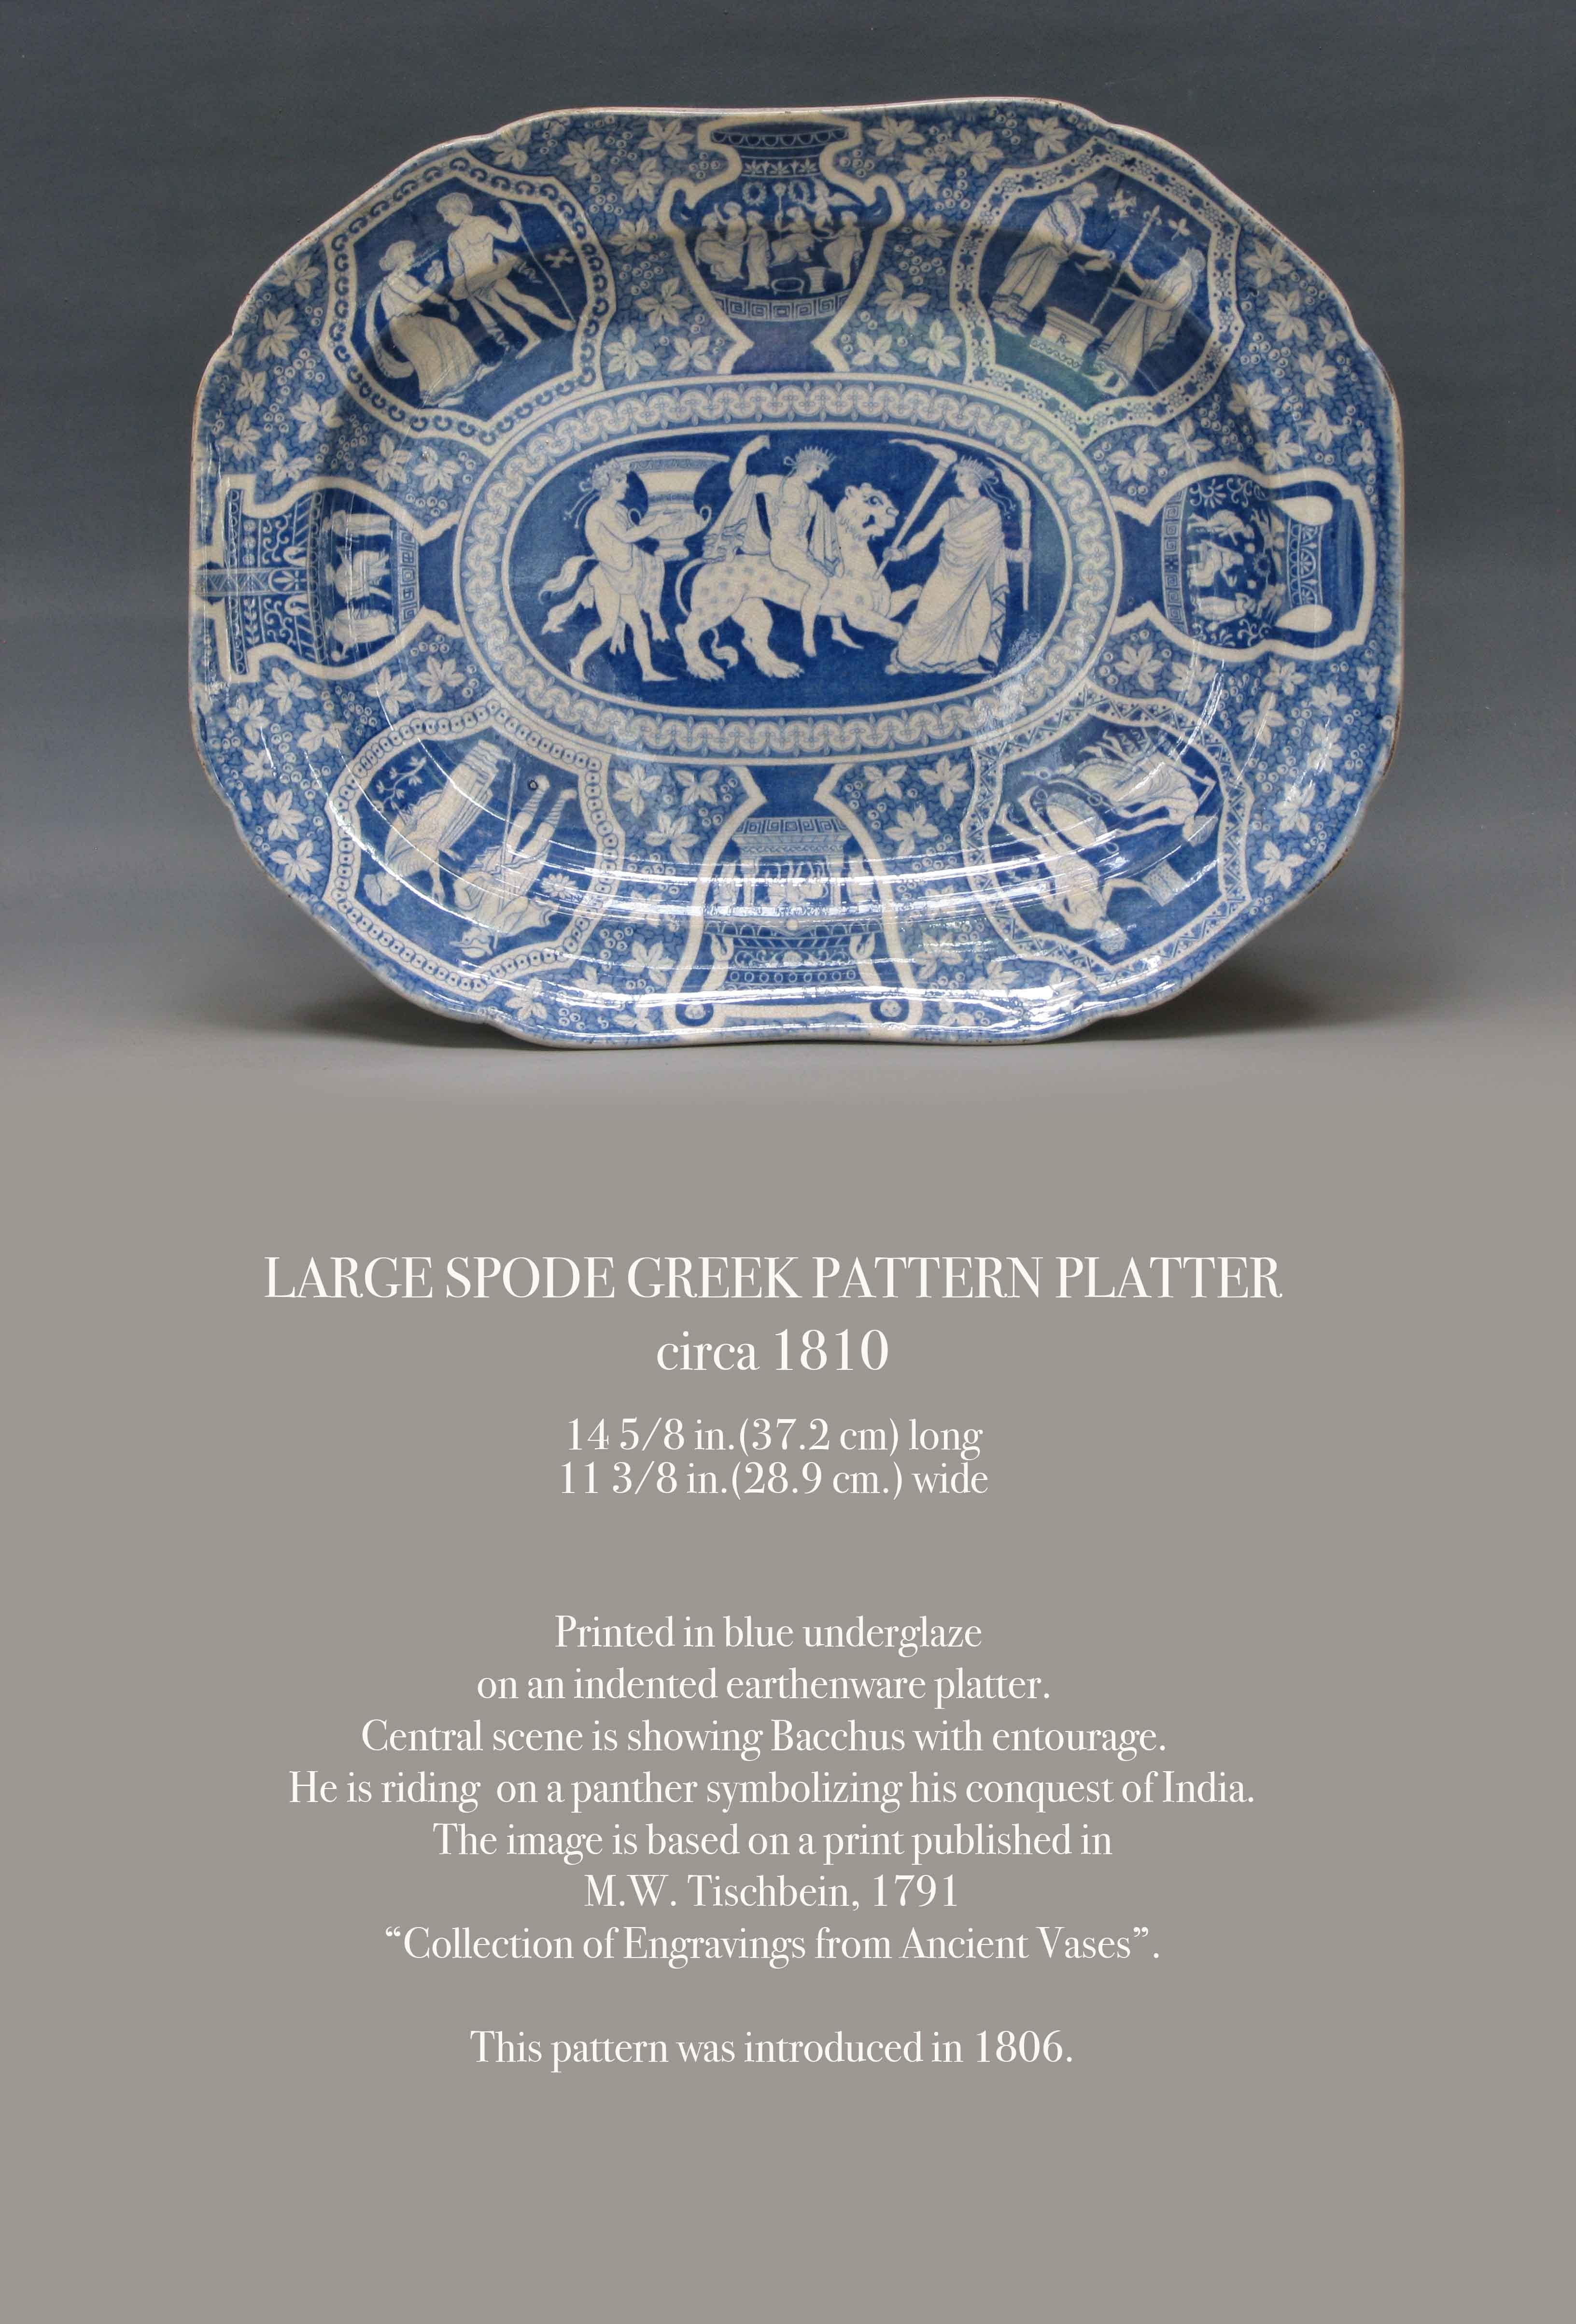 Large spode Greek pattern platter

Circa 1810.

14 5/8